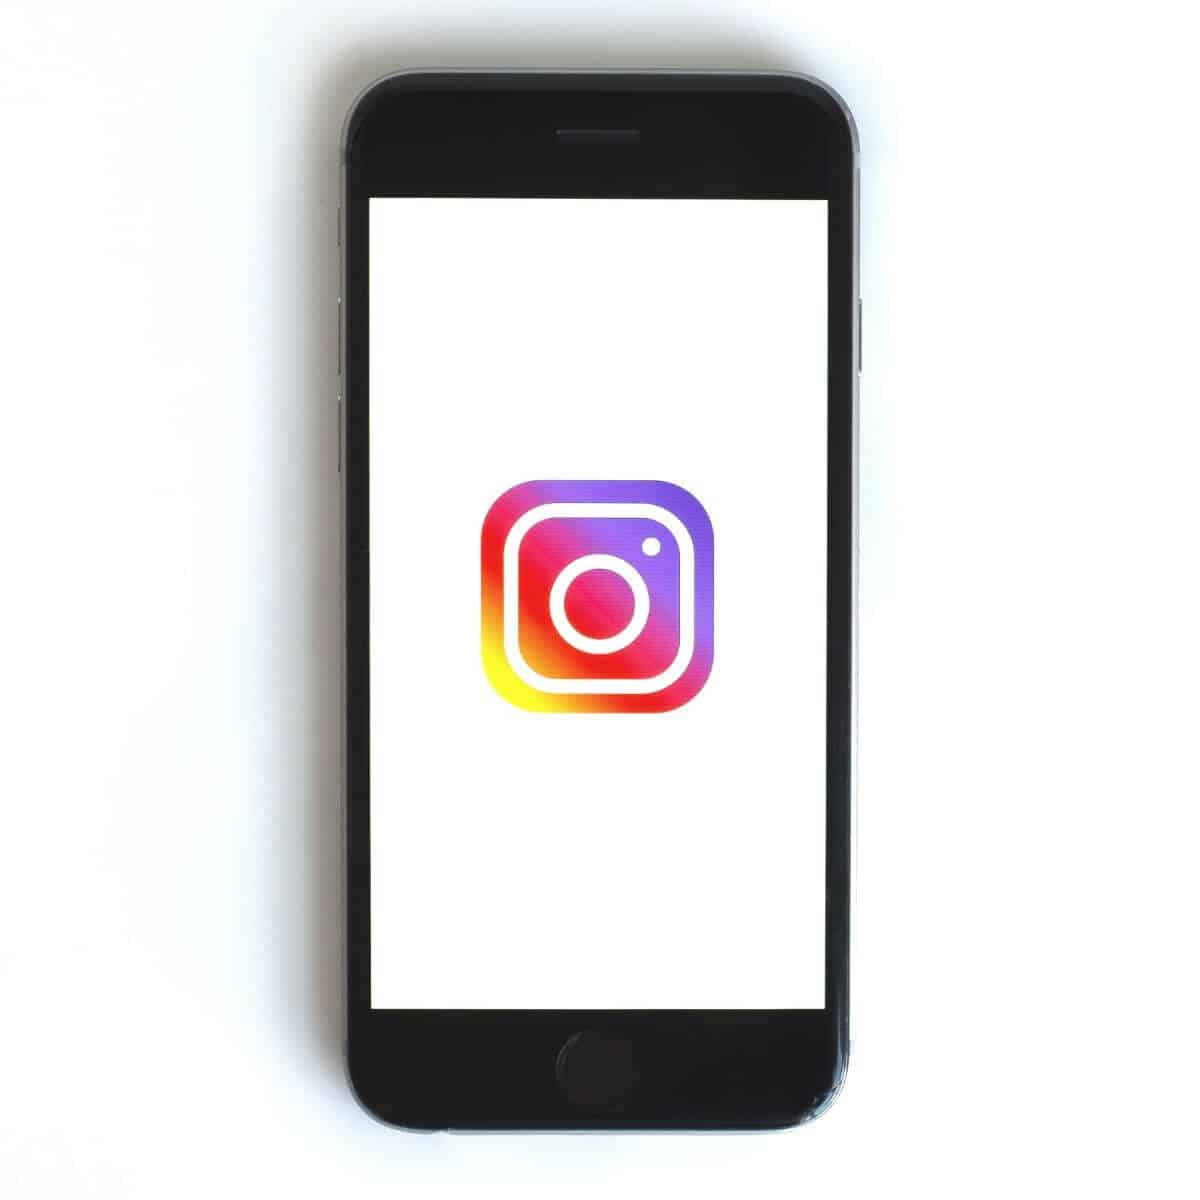 Phone showing Instagram logo on screen.